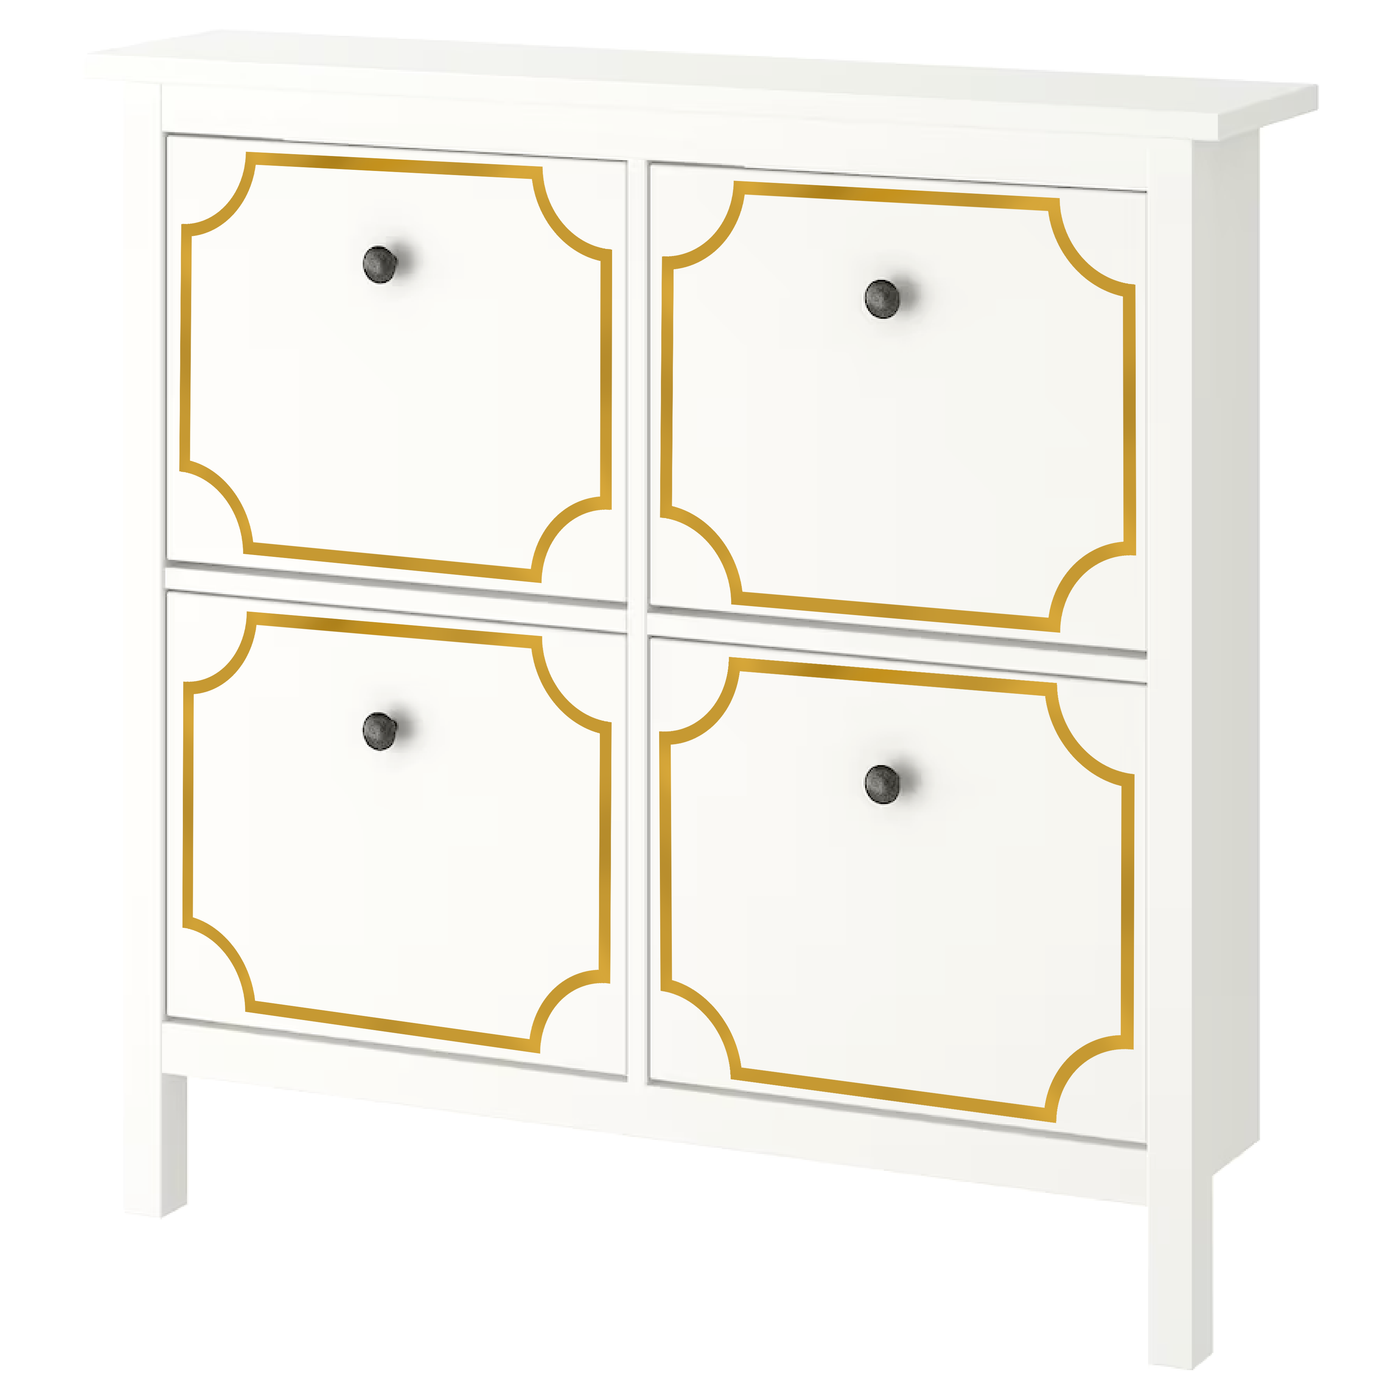 Styl-Panel Kit: #1124 to suit IKEA Hemnes 4-Drawer Shoe Cabinet